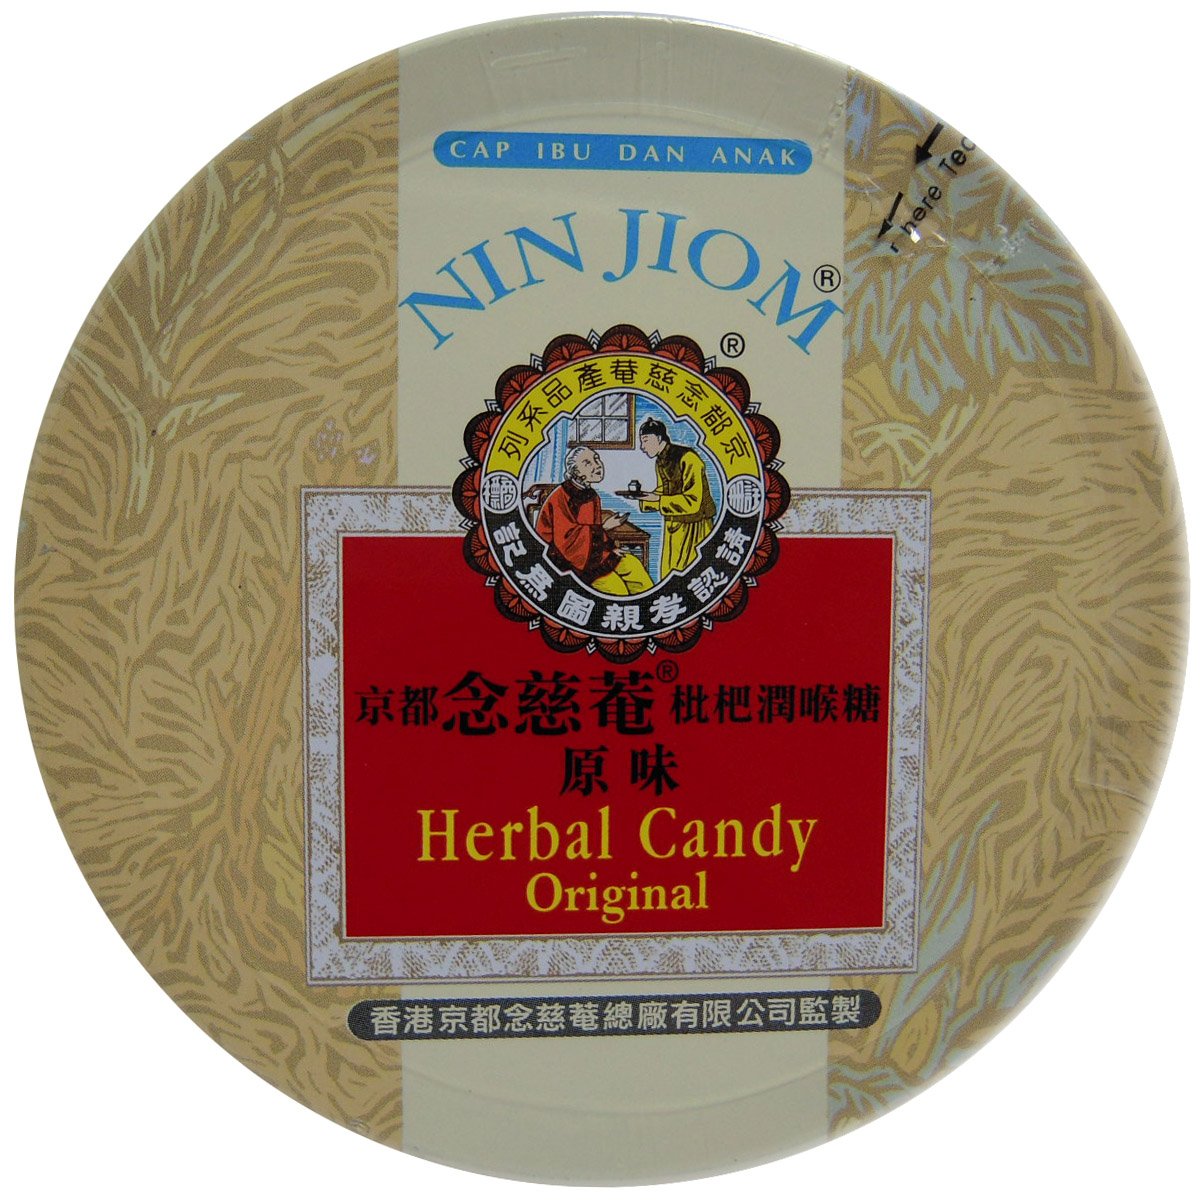 Nin Jiom - Herbal Candy - Original Flavor - Tin (60 Gram)